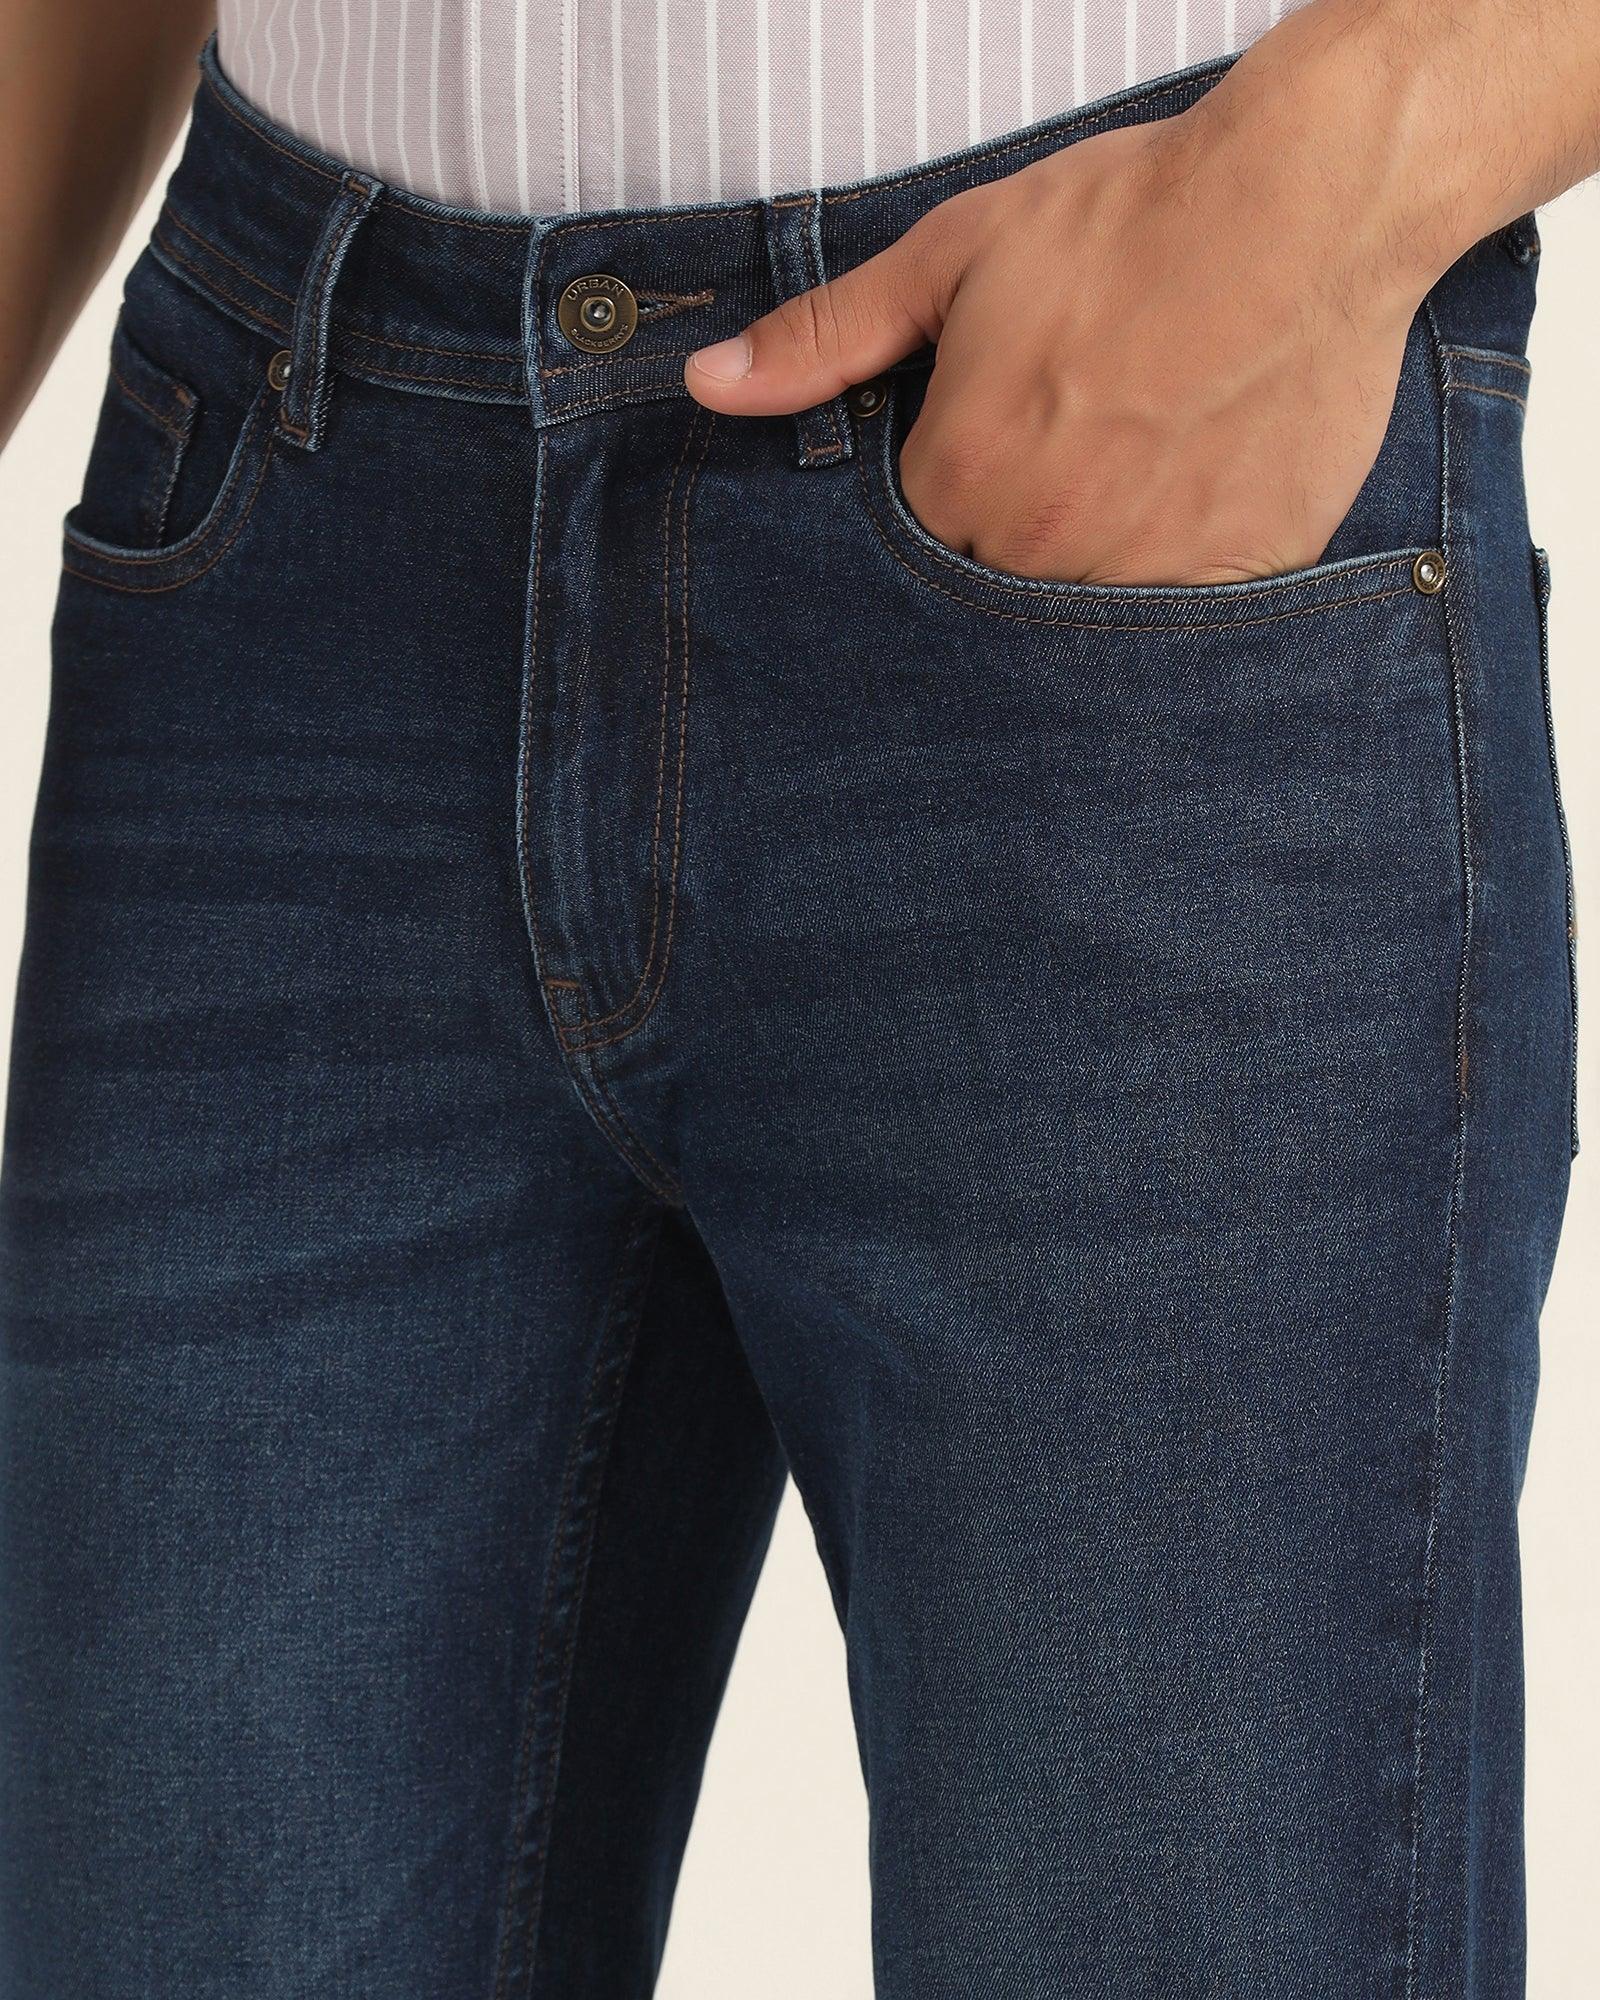 Super Clean Slim Comfort Buff Fit Indigo Jeans - Dacka